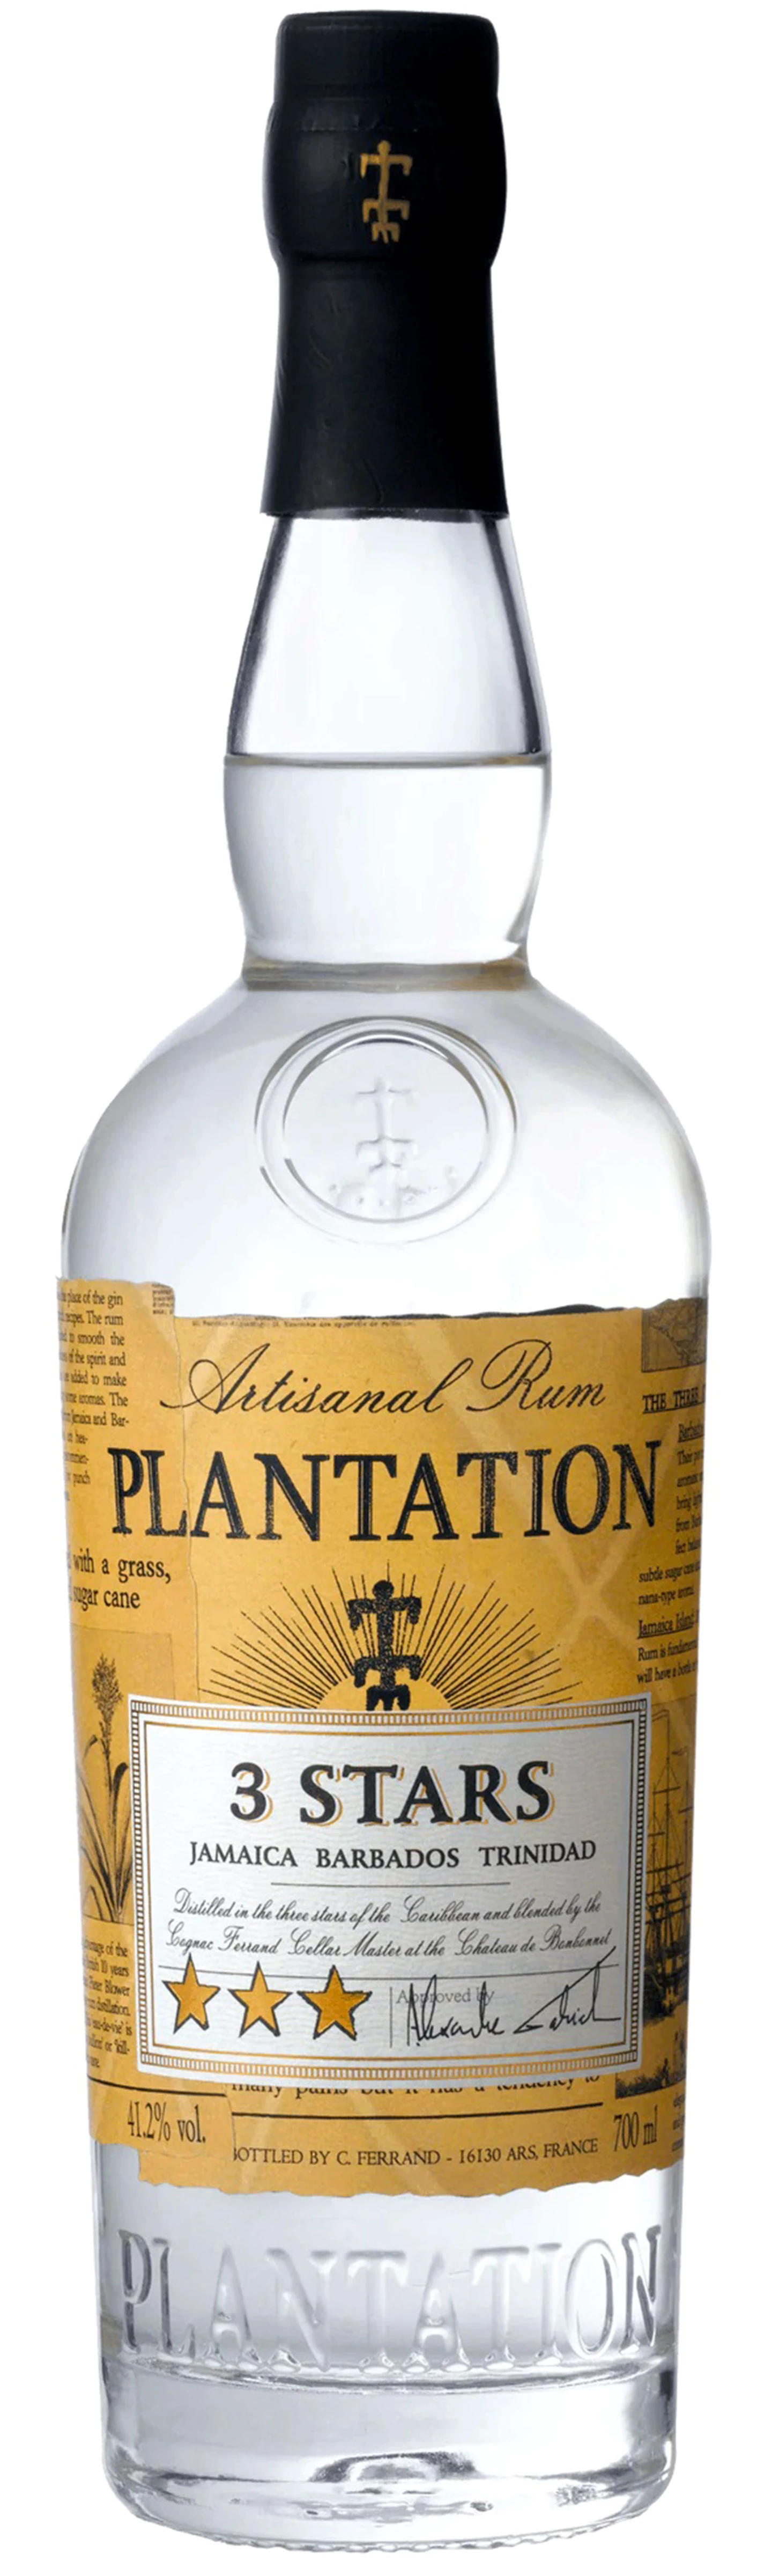 Plantation_Rum_3-Stars_Jamaica-Barbados-Trinidad